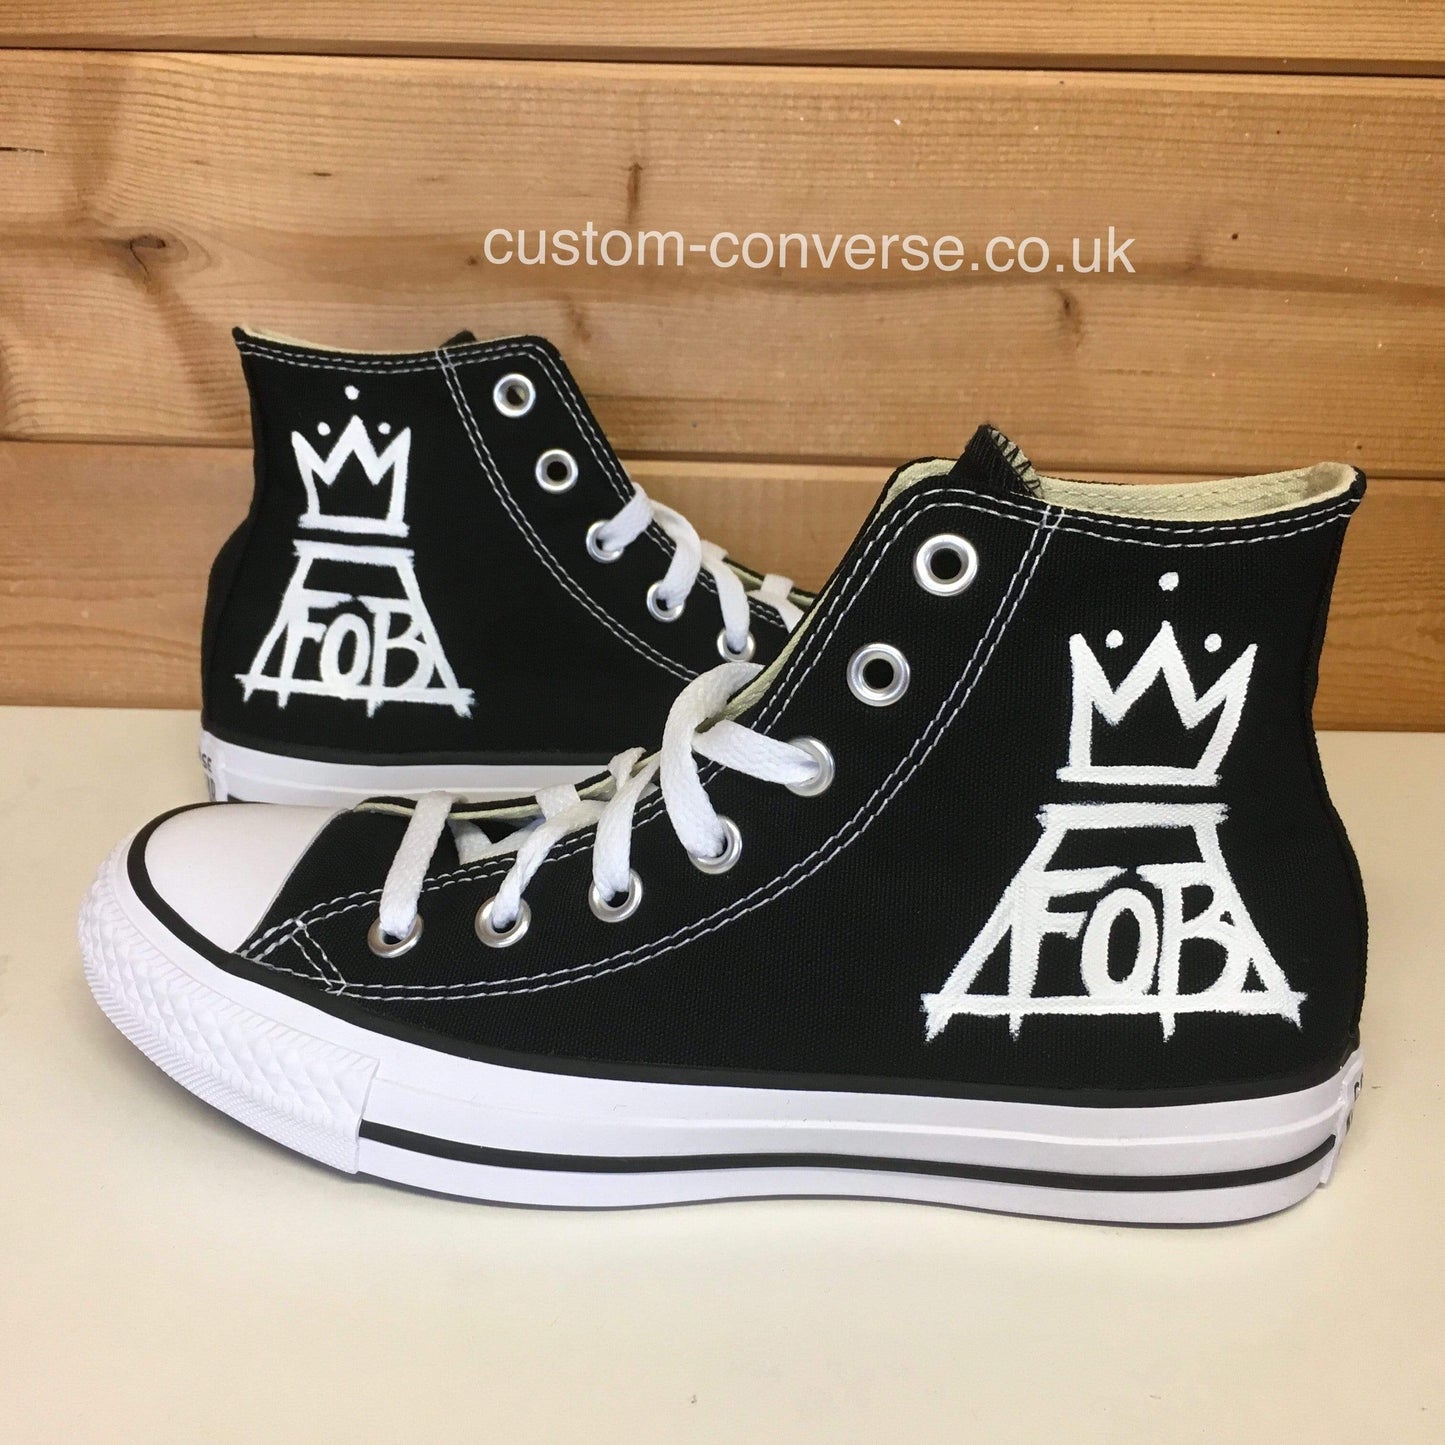 Fall Out Boy - Custom Converse Ltd.